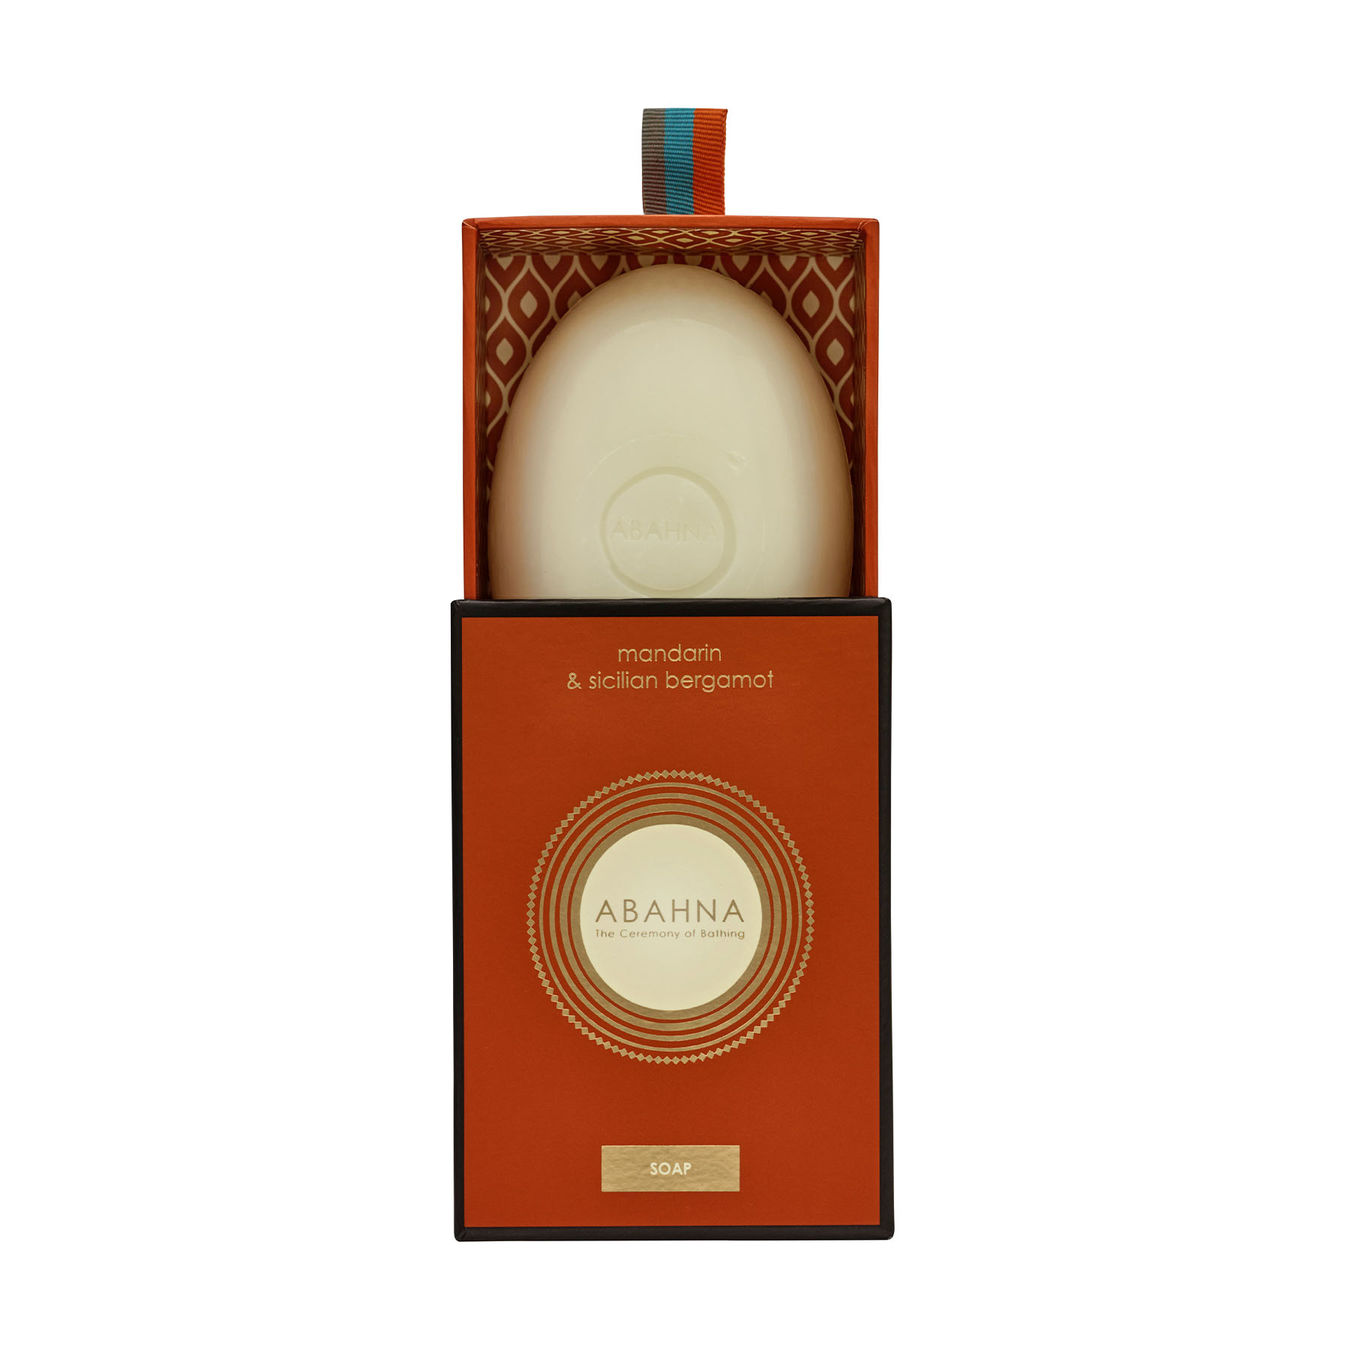 ABAHNA Mandarin & Sicilian Bergamot Soap 170g Femme